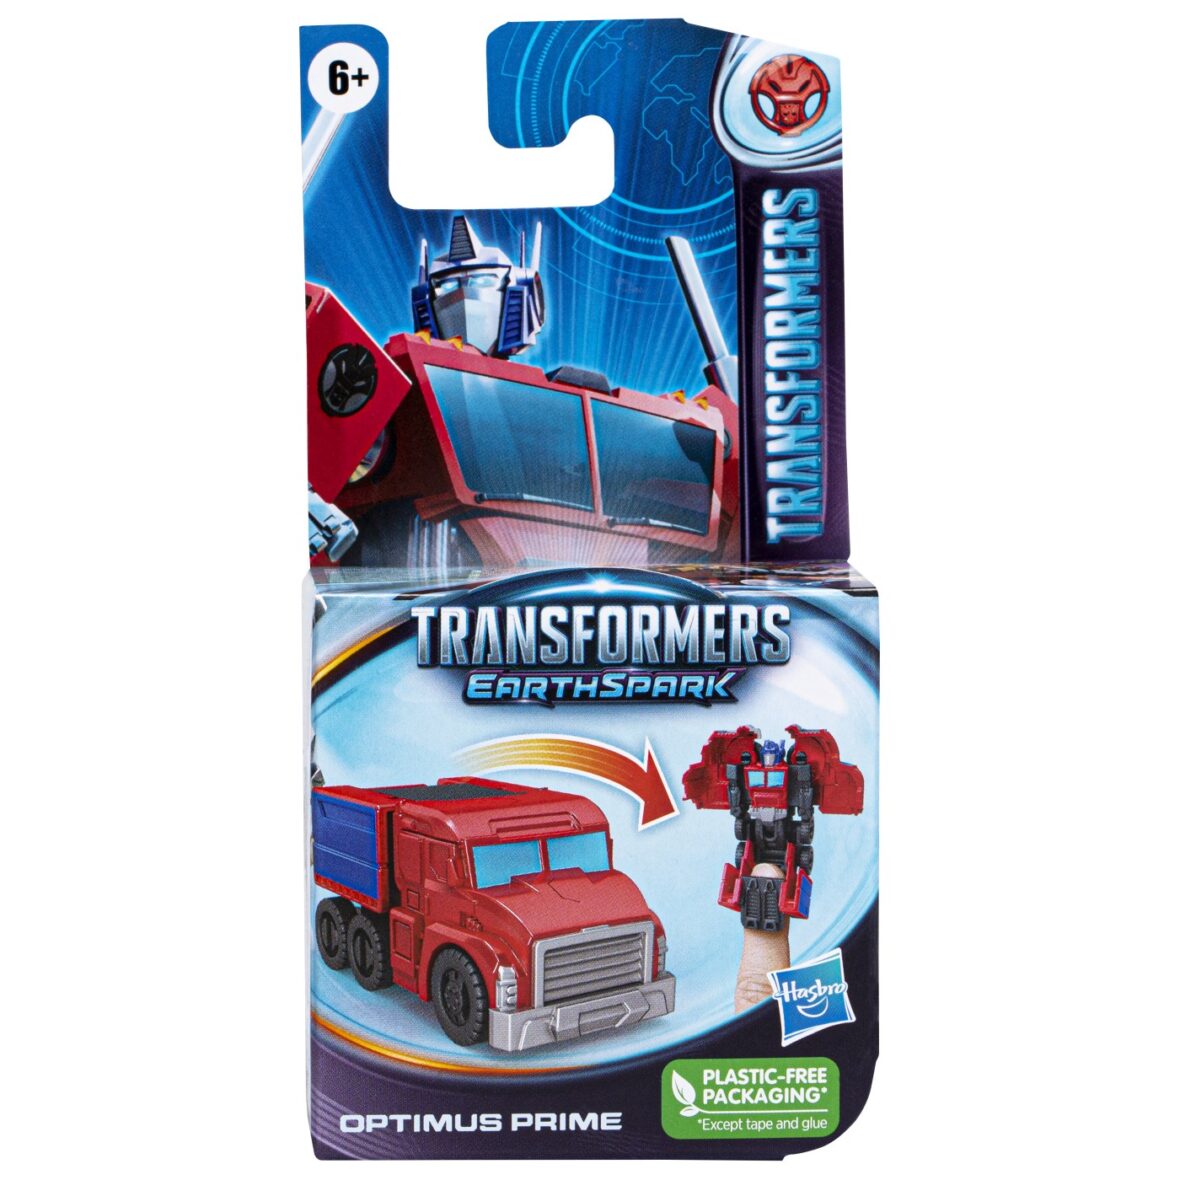 Transformers 7 Earthspark Tacticon Figurina Transformabila Optimus Prime 6.5cm